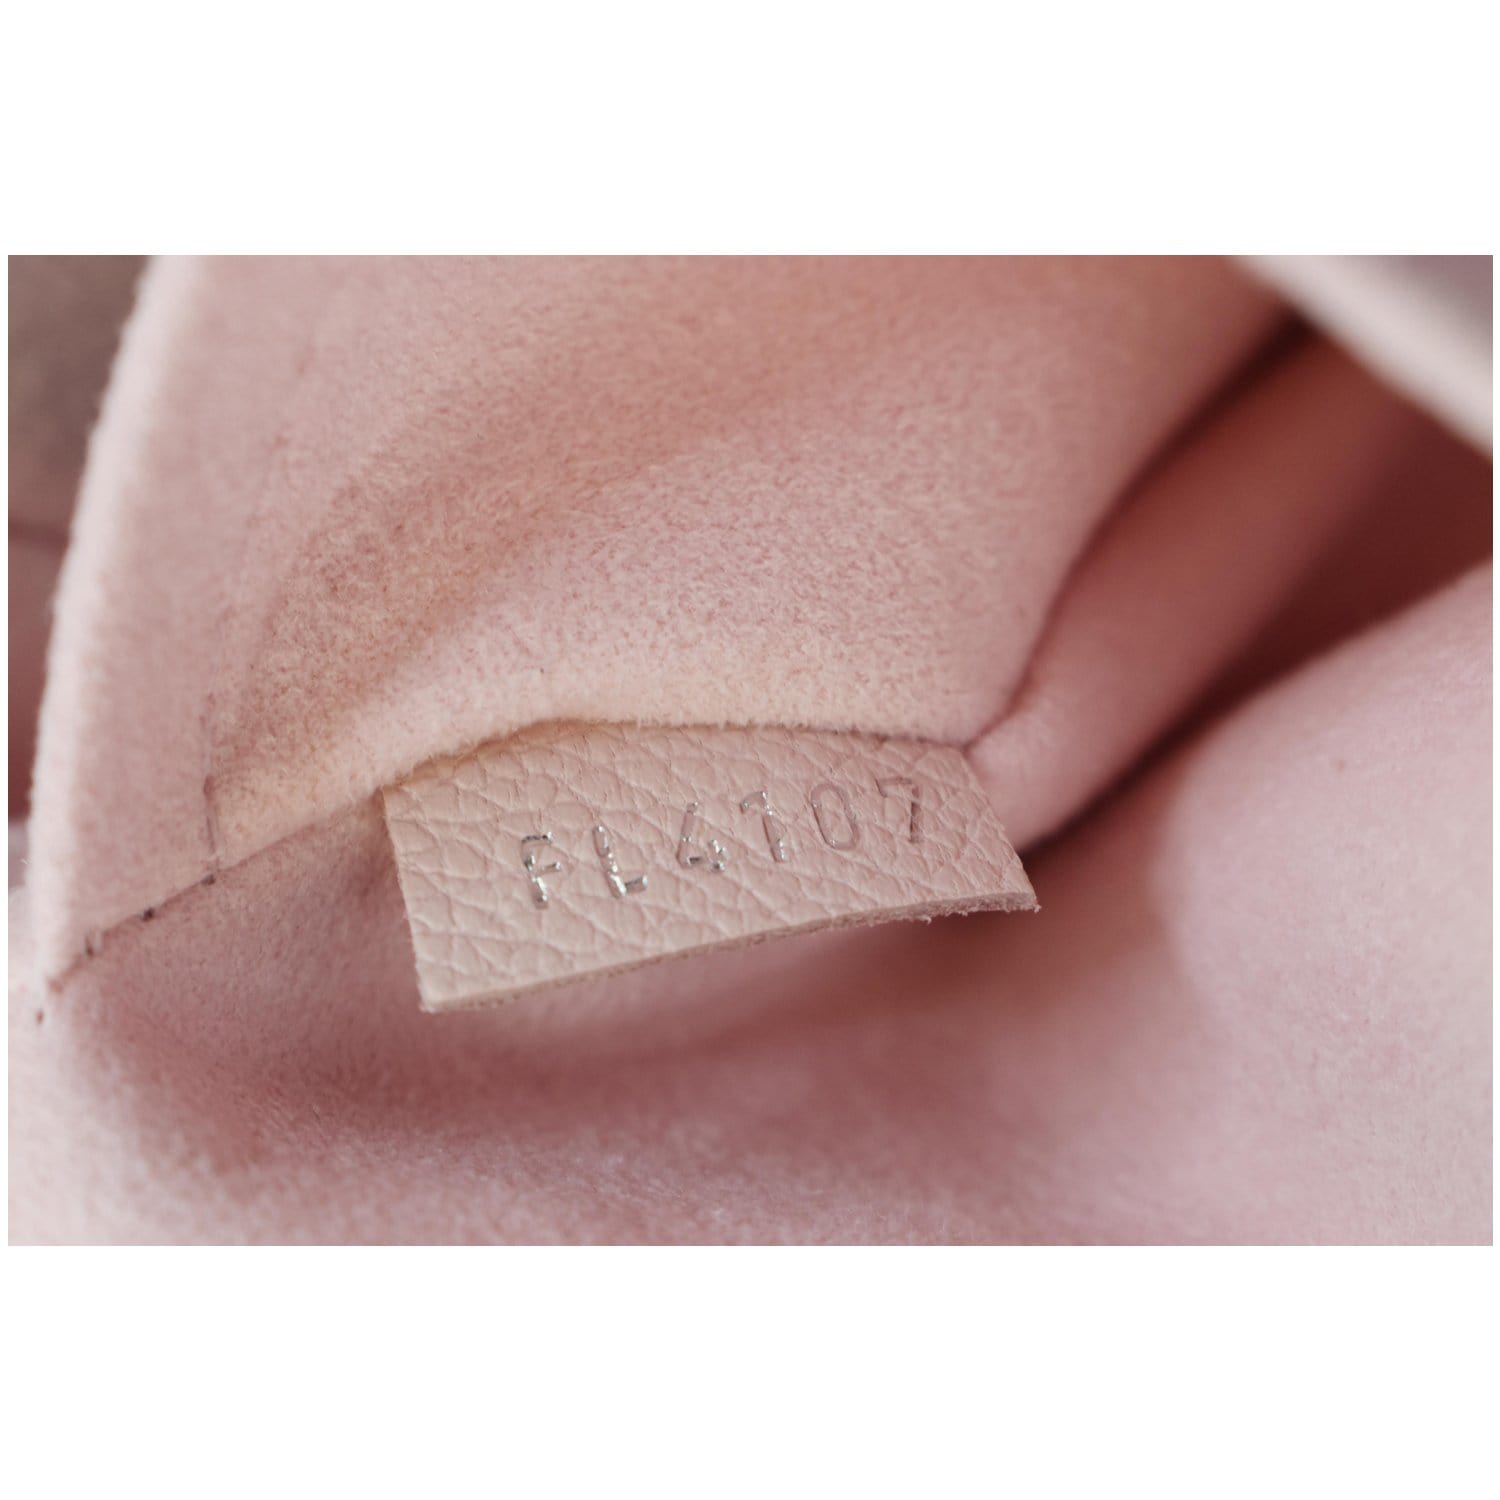 Louis Vuitton - Authenticated MyLockMe Handbag - Leather Beige Plain for Women, Very Good Condition